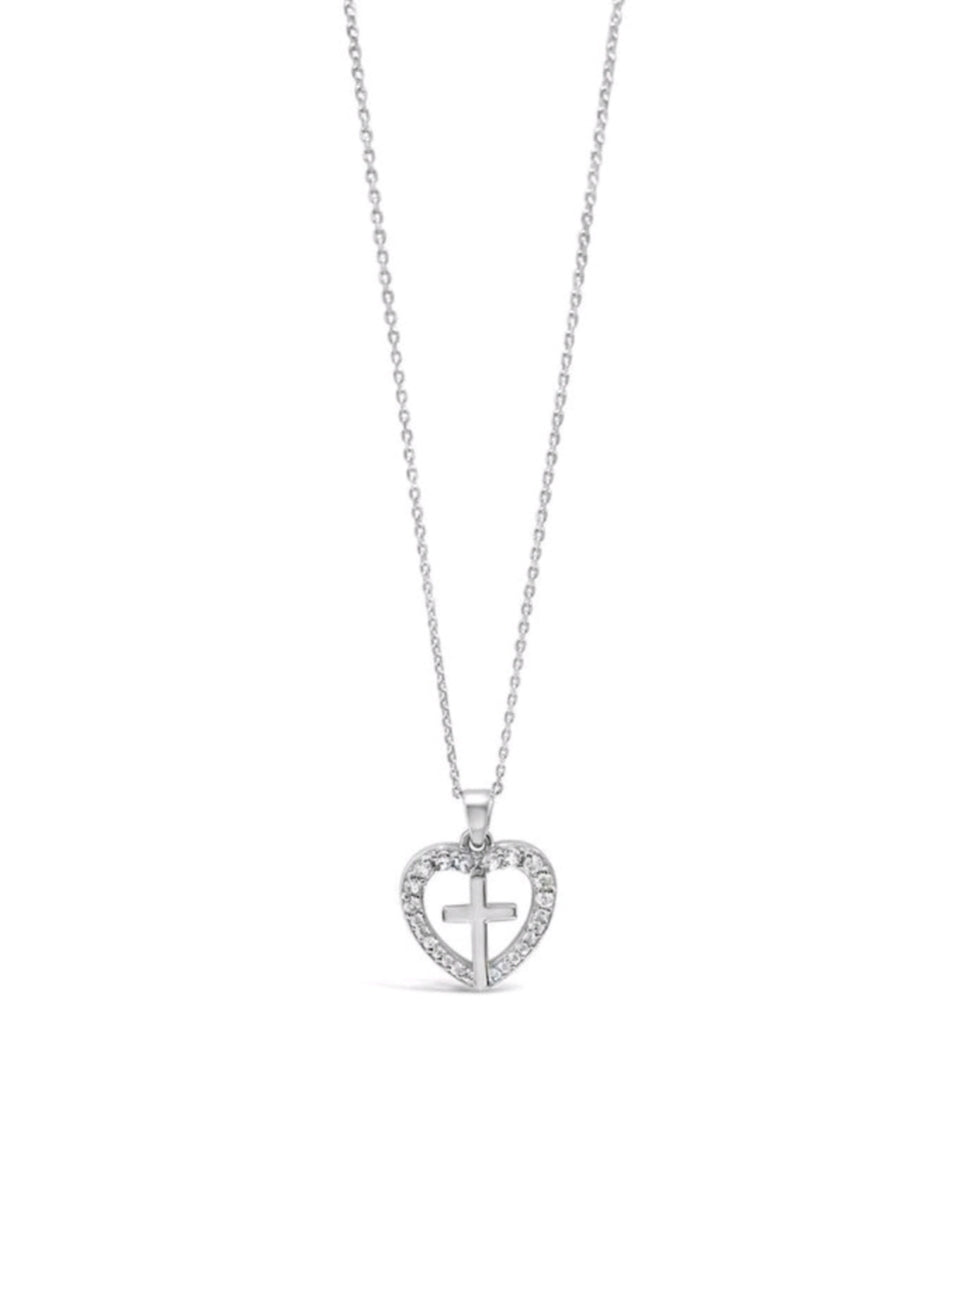 Sterling Silver Heart & Cross Pendant/Chain